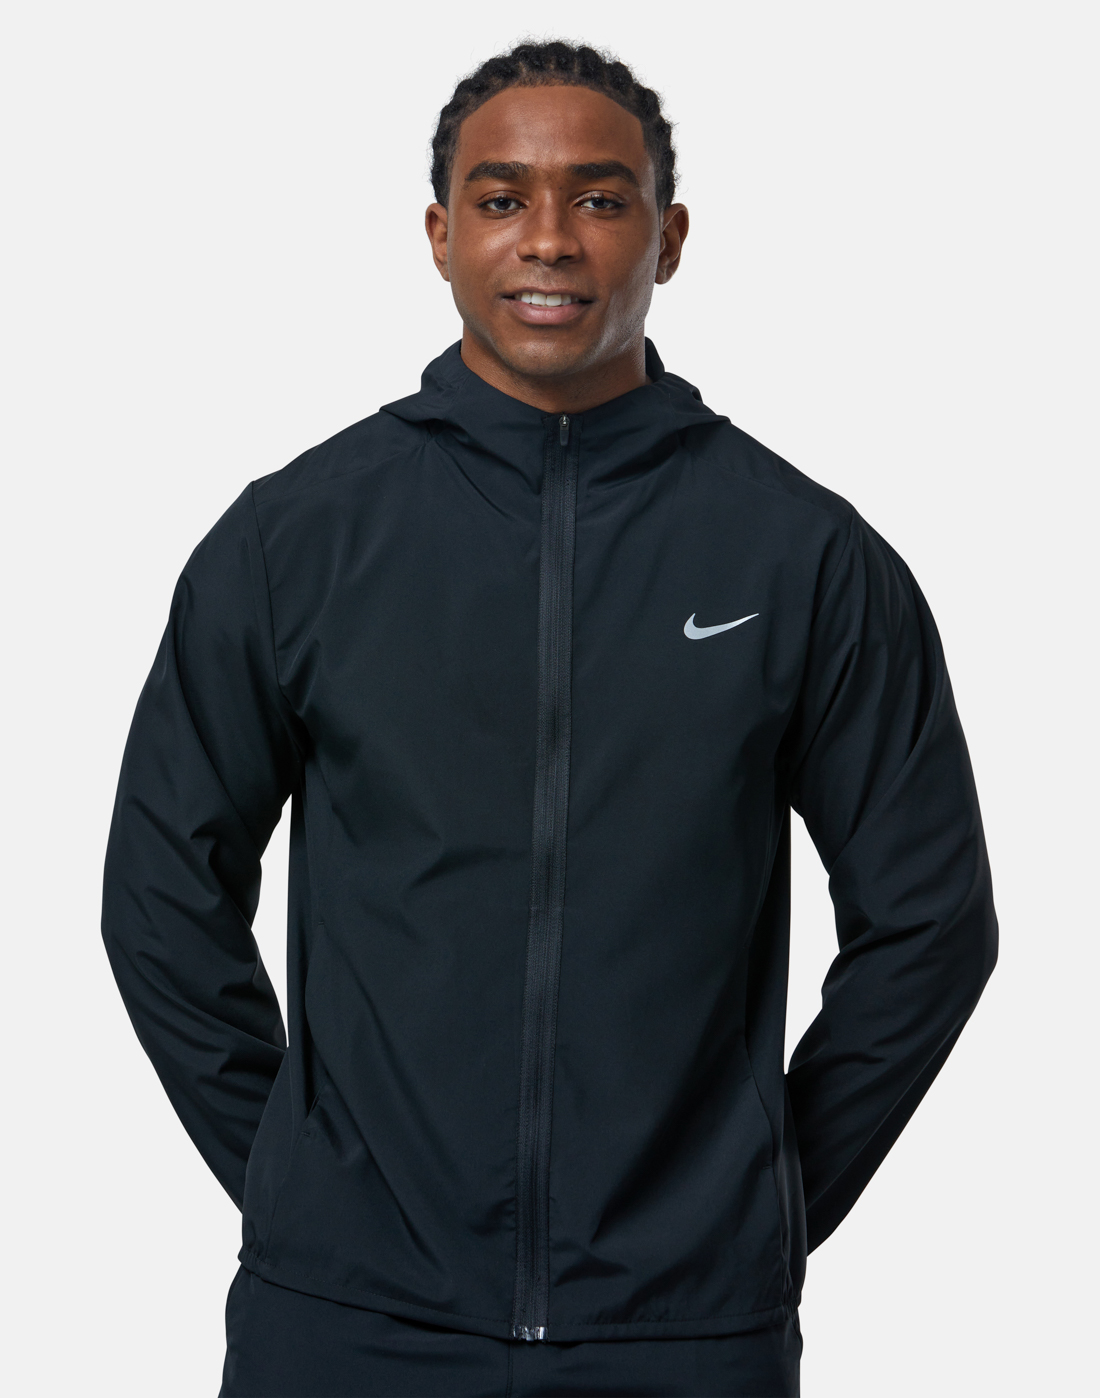 Nike Mens Form Train Woven Full Zip Jacket - Black | Life Style Sports IE